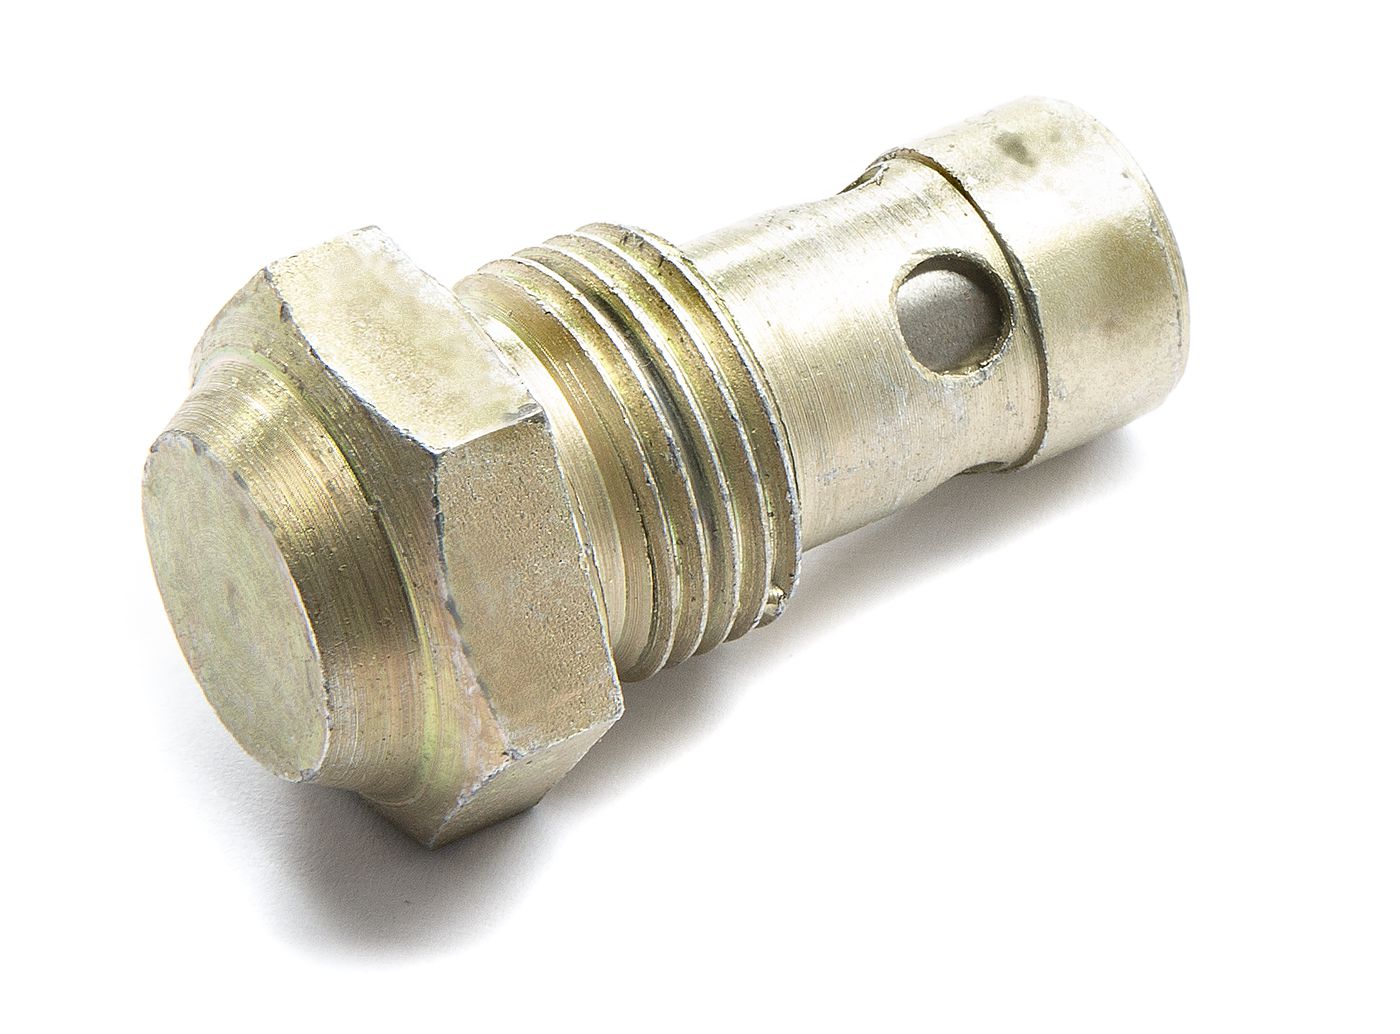 Öldruckventil
Oil pressure valve
Clapet pression d'huile
Valvul